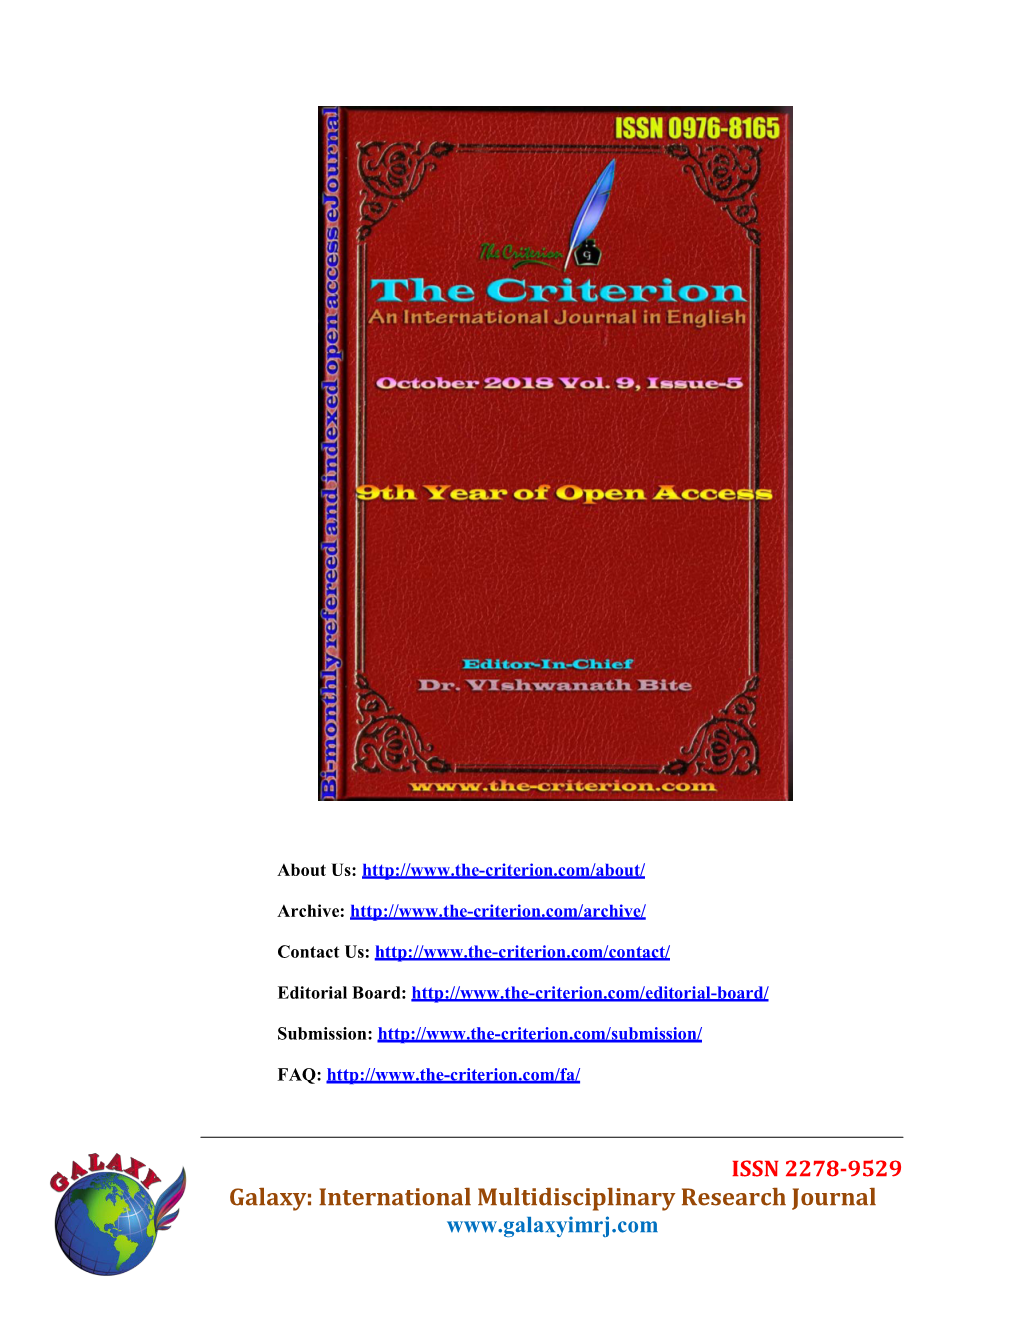 Galaxy: International Multidisciplinary Research Journal the Criterion: an International Journal in English Vol